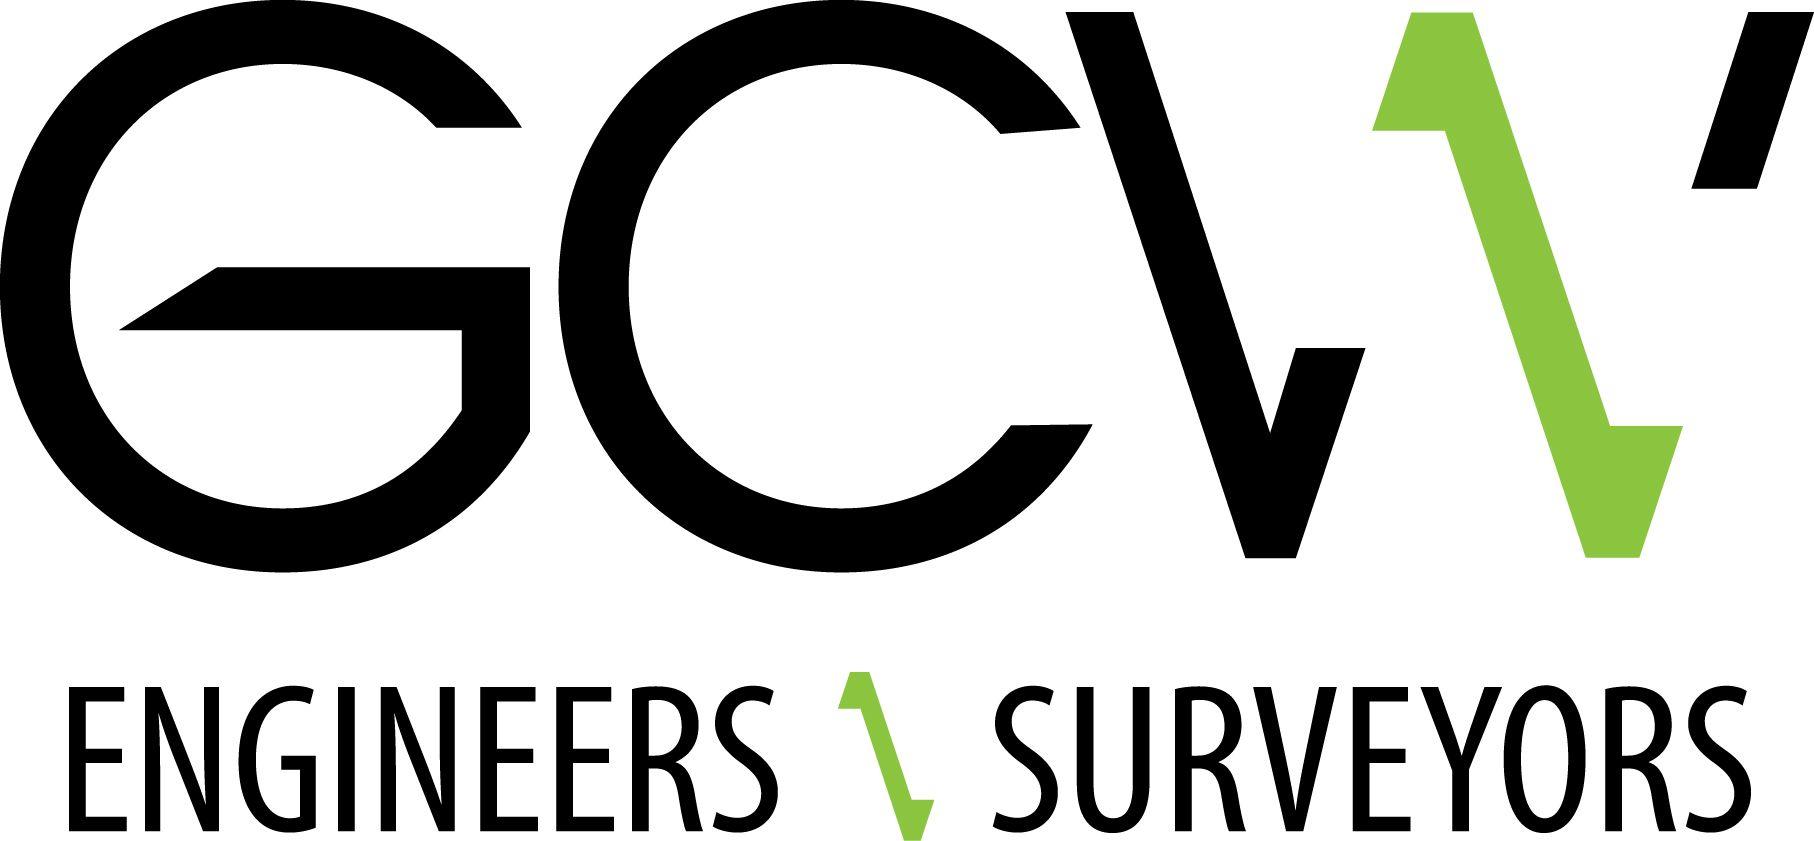 Gcw Logo - GCW FINAL LOGO